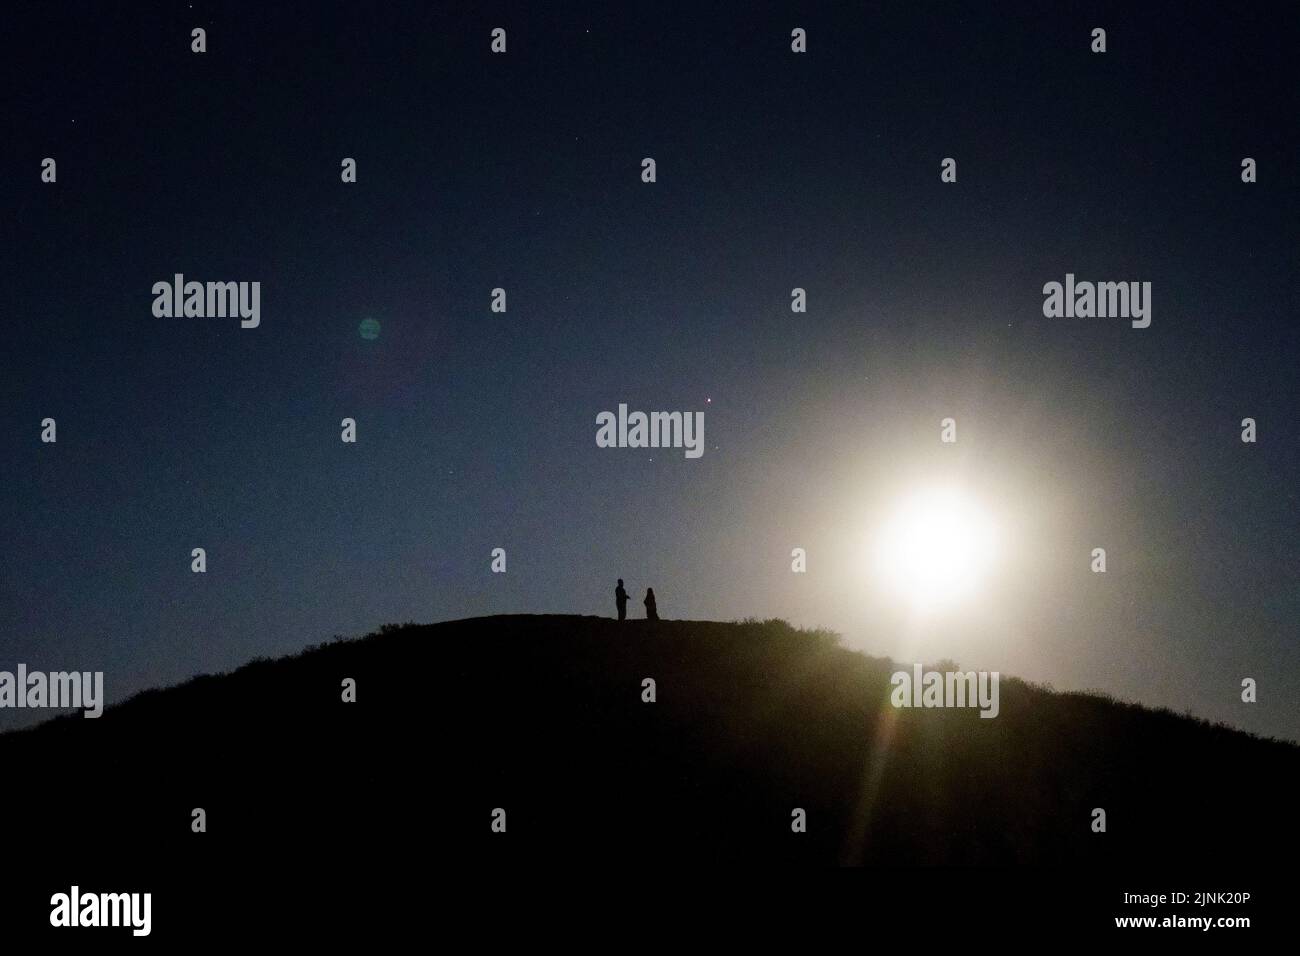 Una pareja observa la superluna Sturgeon, la superluna final del año, desde una colina en Ealing, al oeste de Londres. Fecha de la foto: Jueves 11 de agosto de 2022. Foto de stock